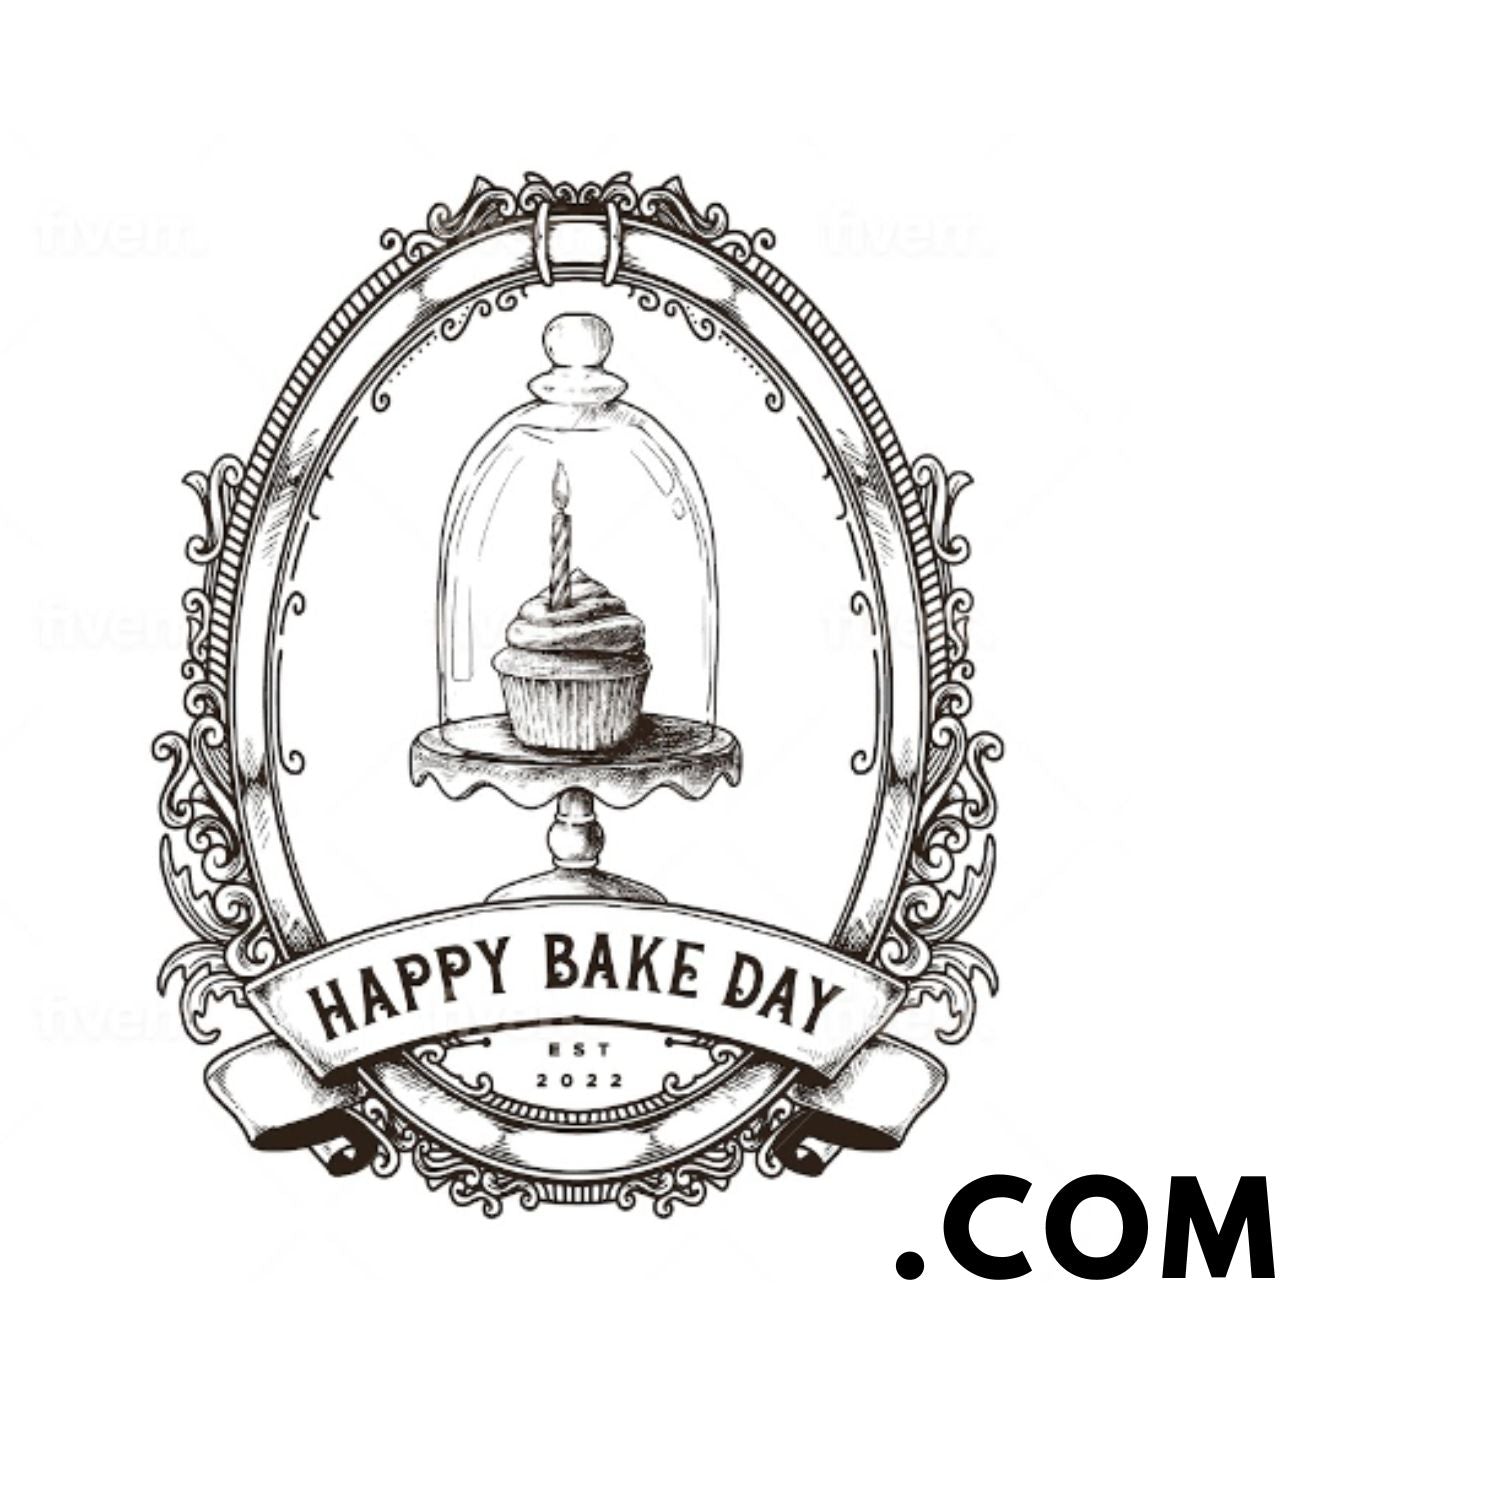 Happy Bake Day Show Website